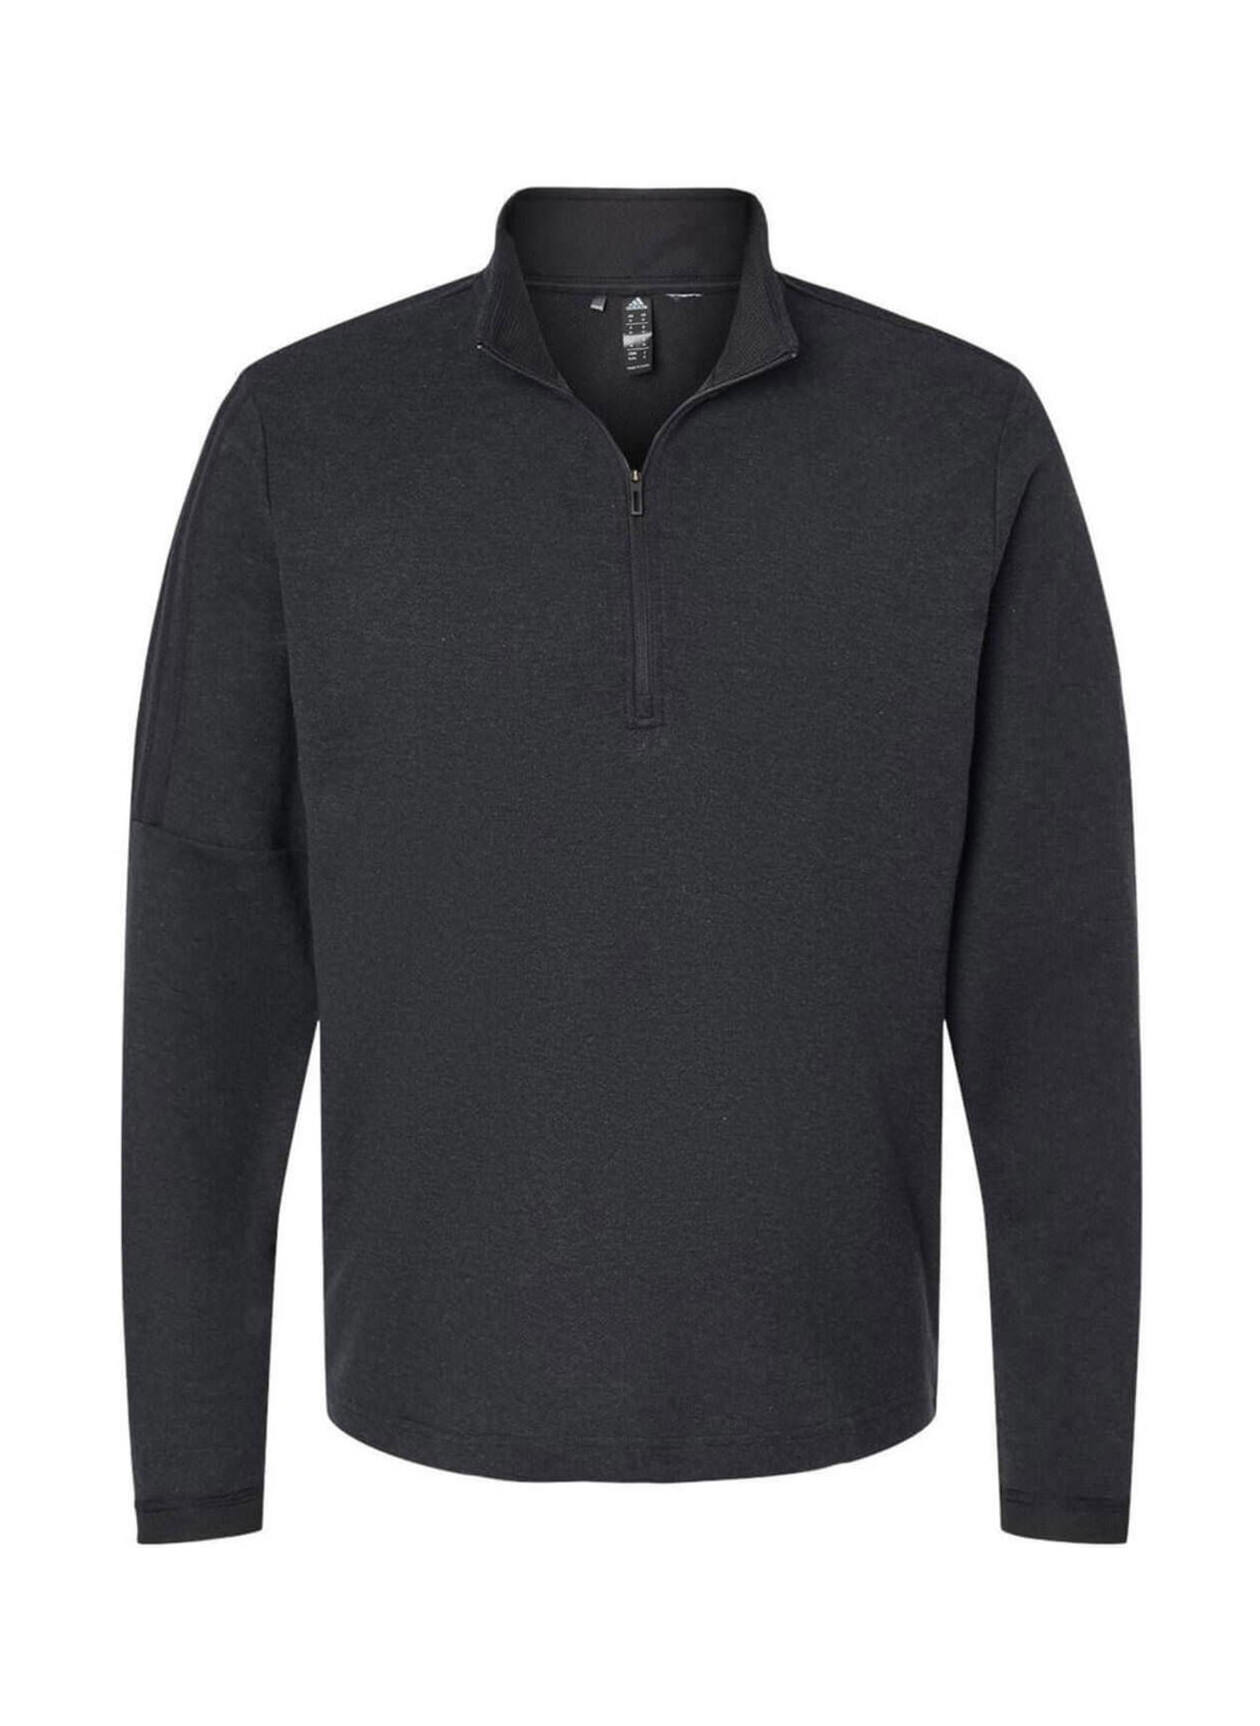 Adidas Men's Black Melange 3-Stripes Quarter-Zip | Custom Quarter Zip